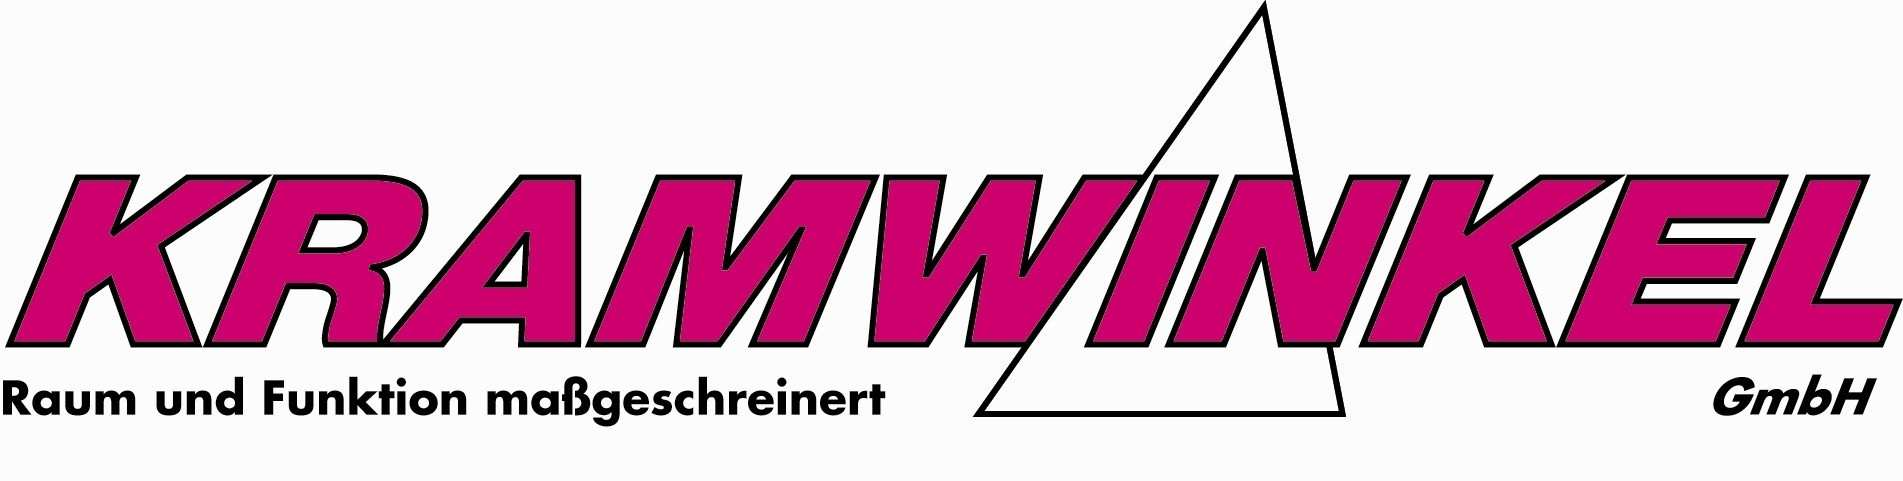 Heinrich Kramwinkel GmbH Industriestrasse 16 63165 Mühlheim Tel.: 06108 9044-0 Fax: 06108 904420 info@karmwinkel.de www.kramwinkel.